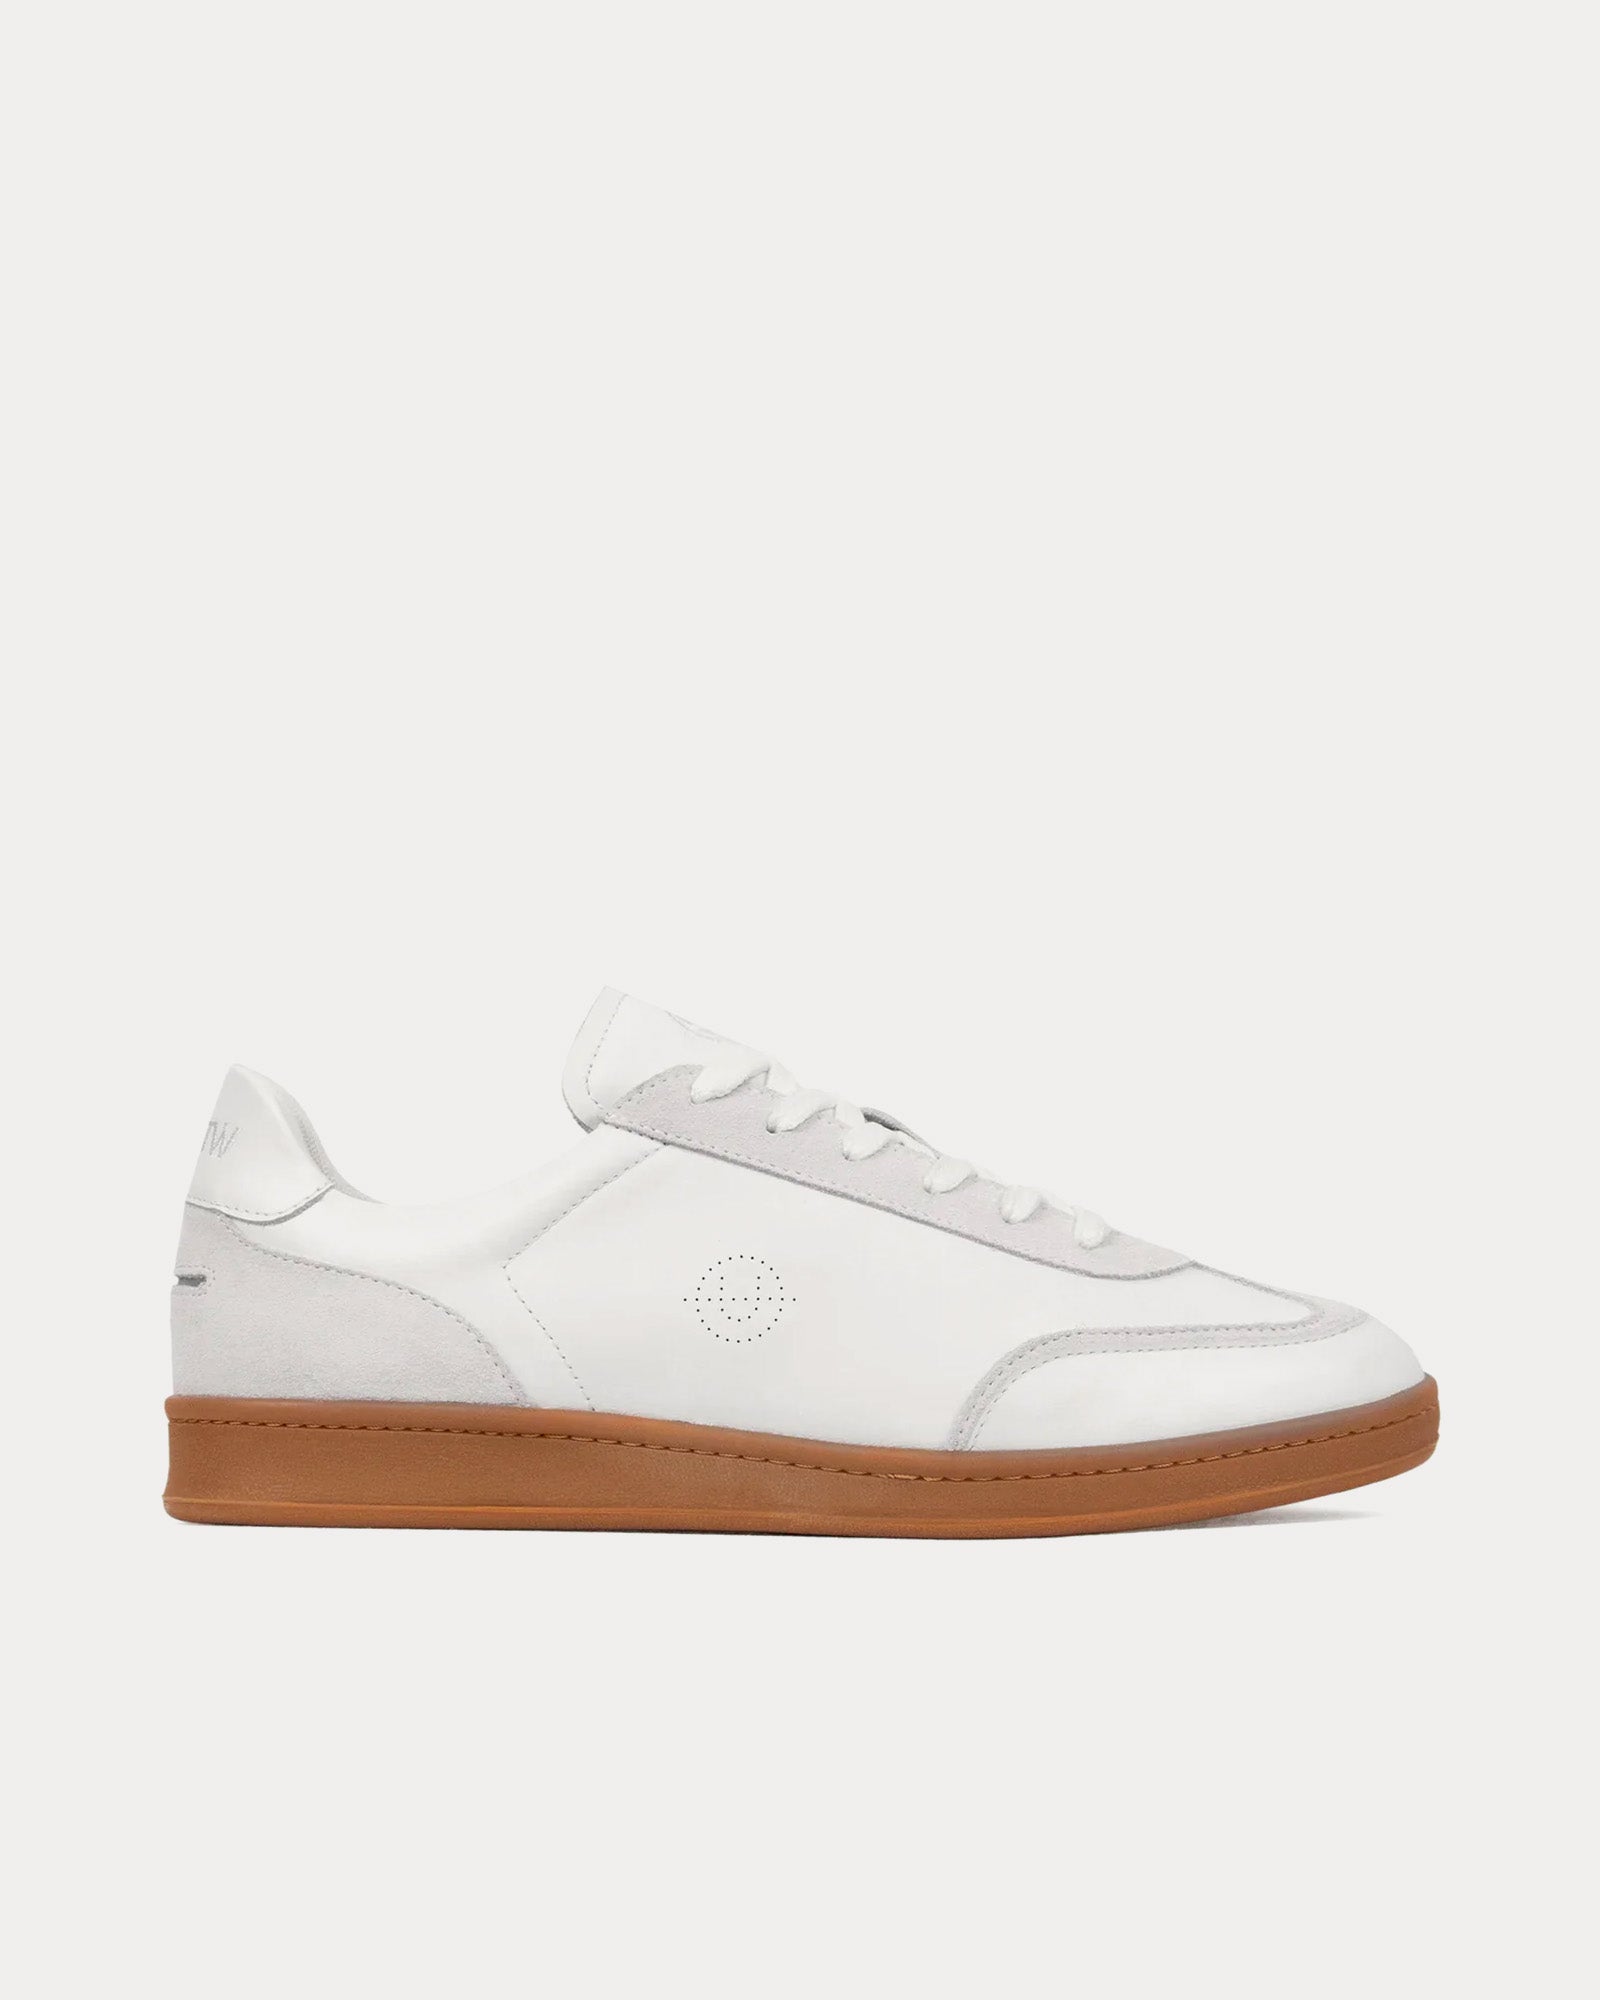 Unseen Footwear - Portelet Leather White / Gum Low Top Sneakers